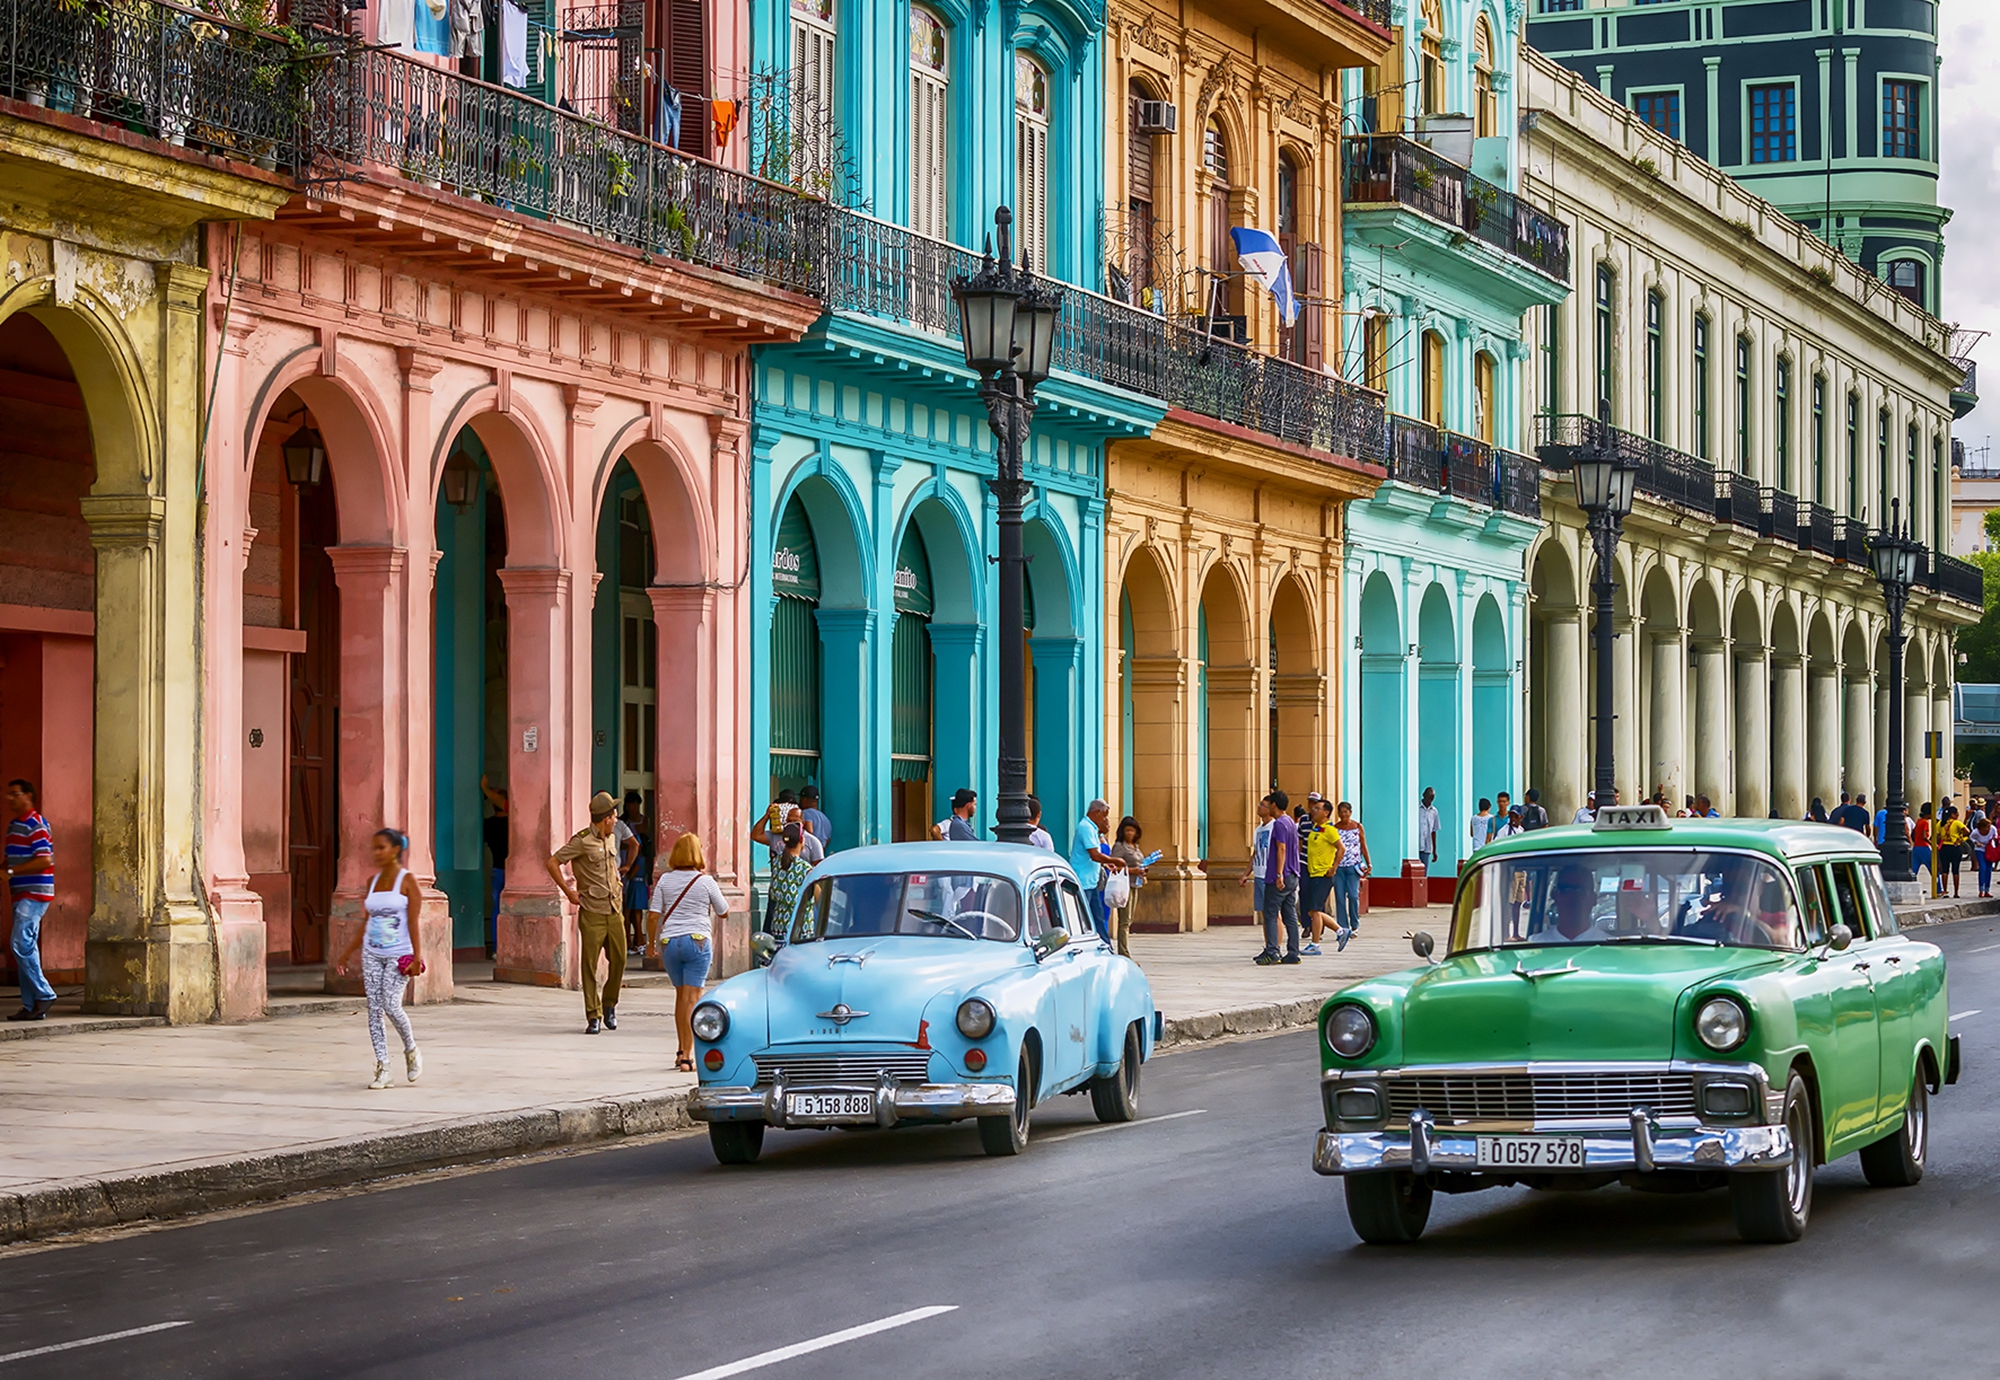 Fototapete „Cuba“ Sunnydecor von